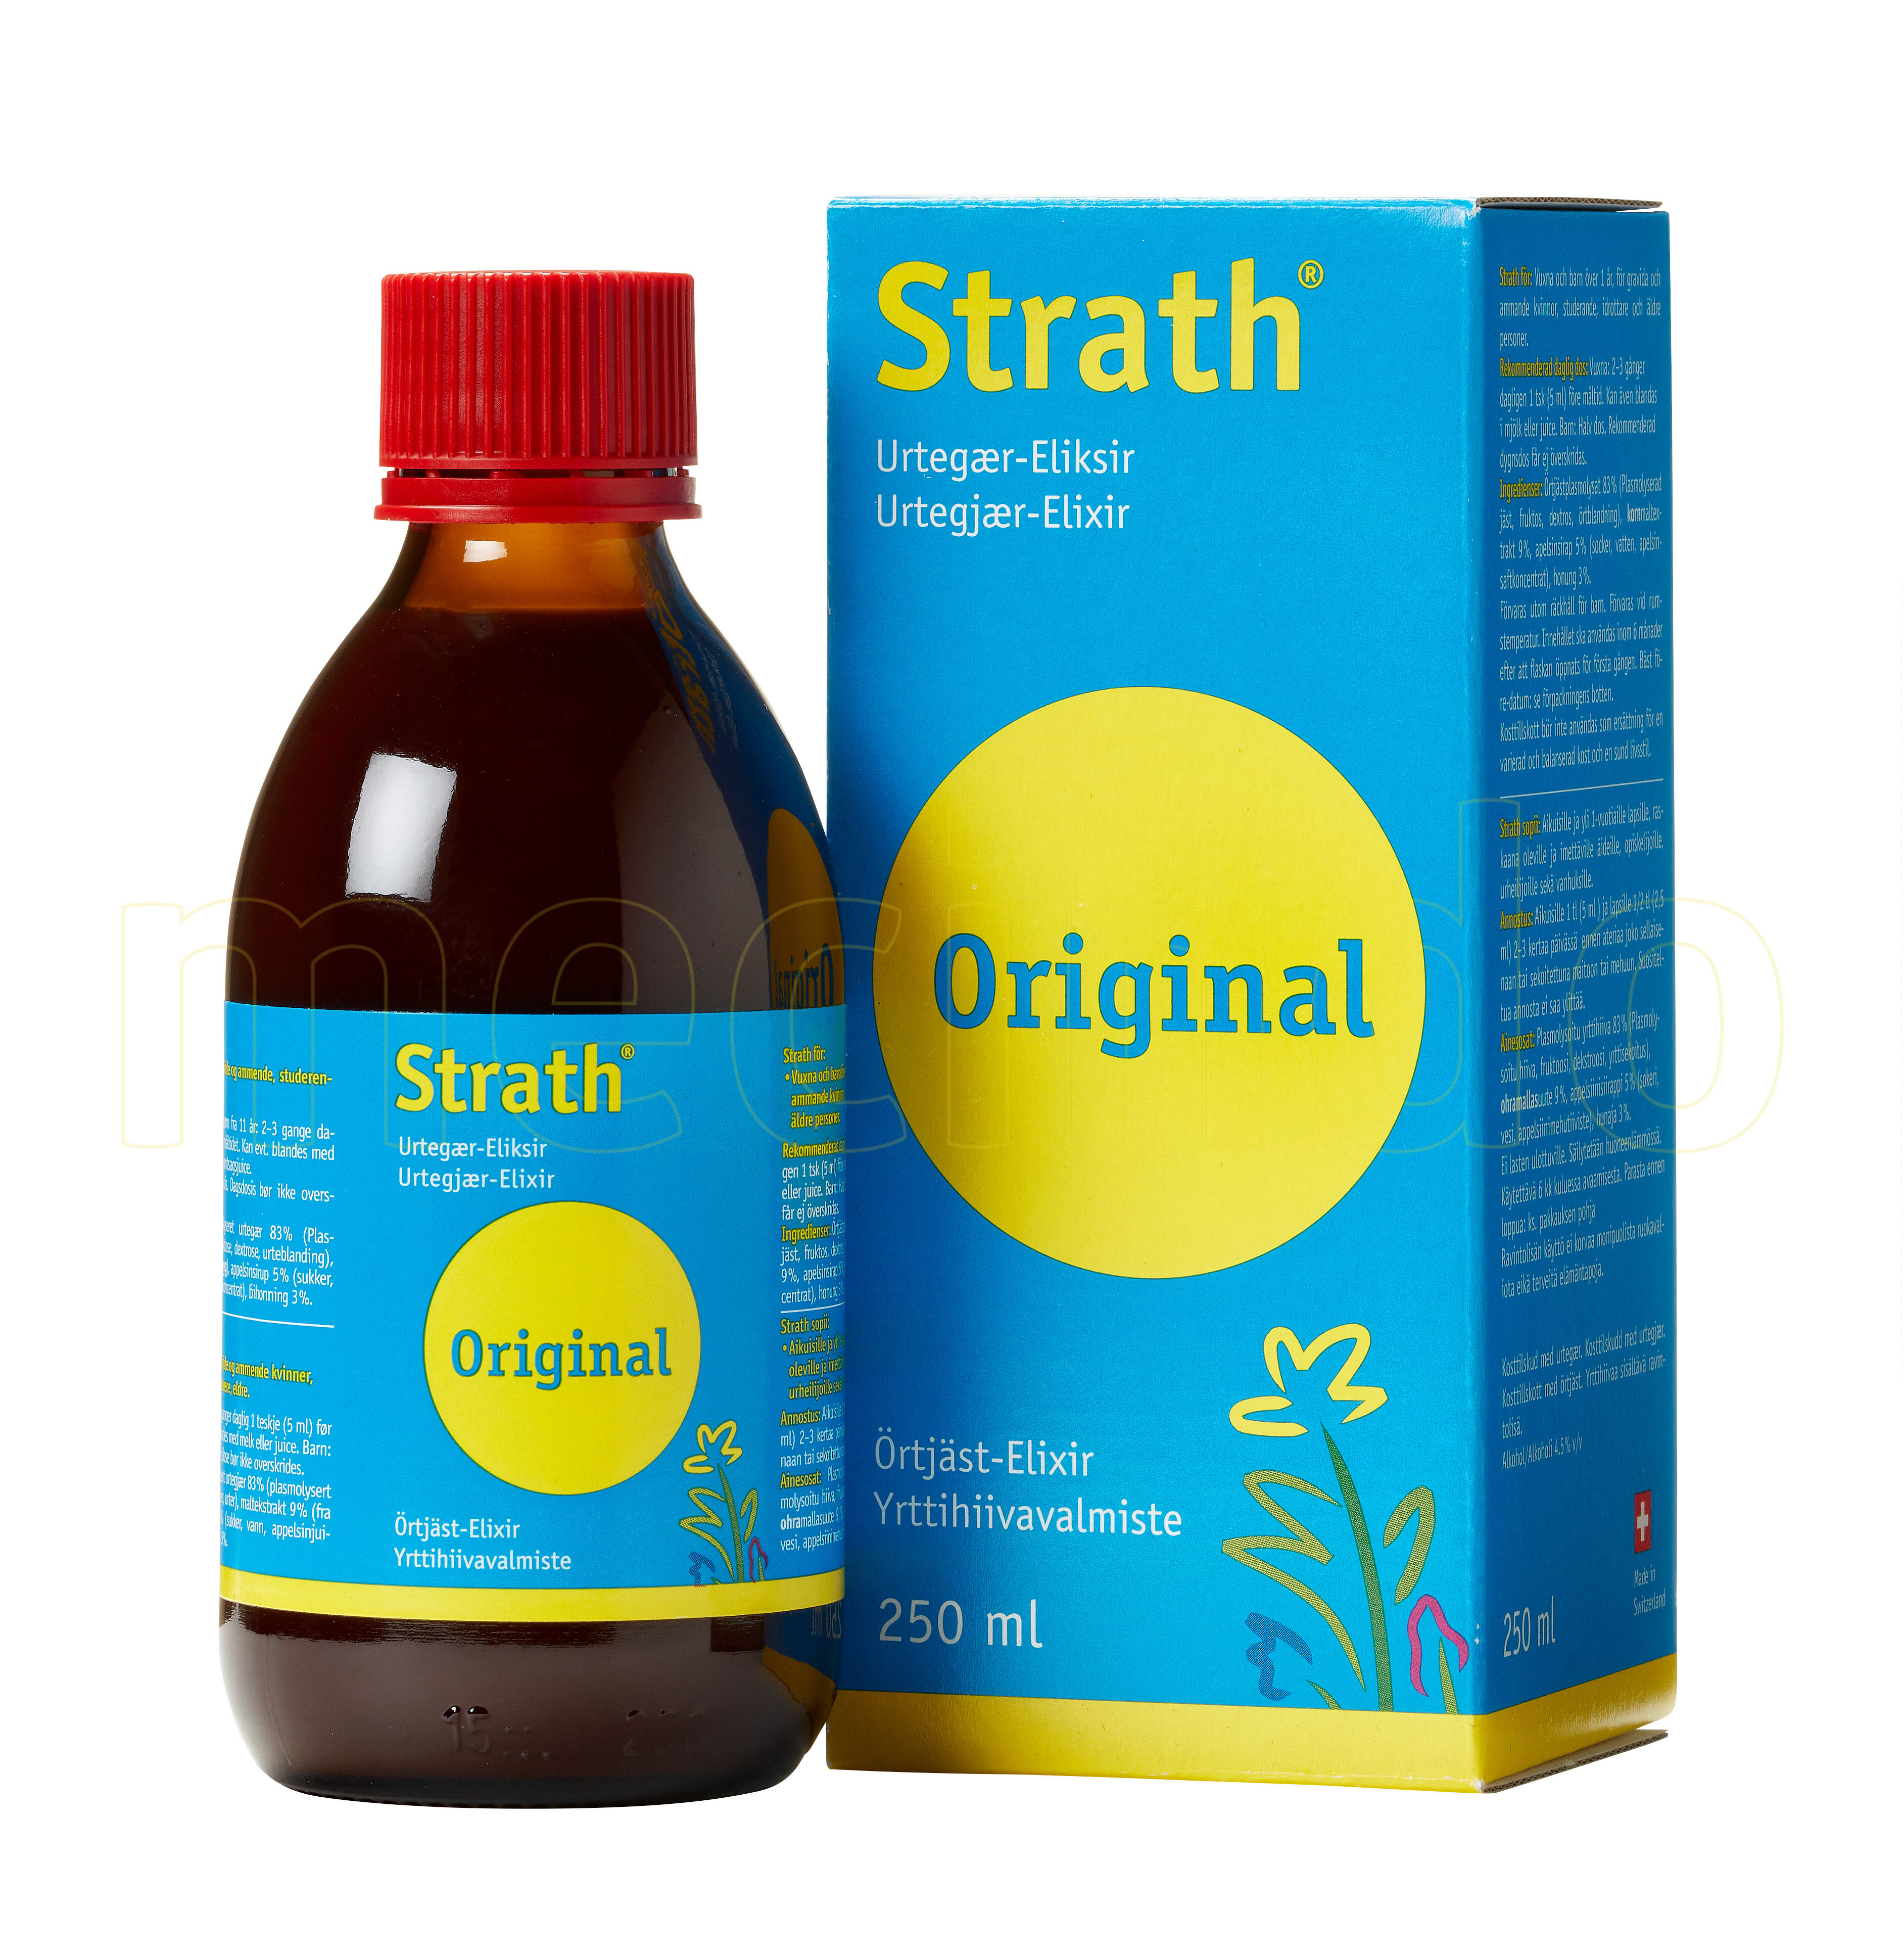 Bio-Strath Strath Eliksir - 250 ml